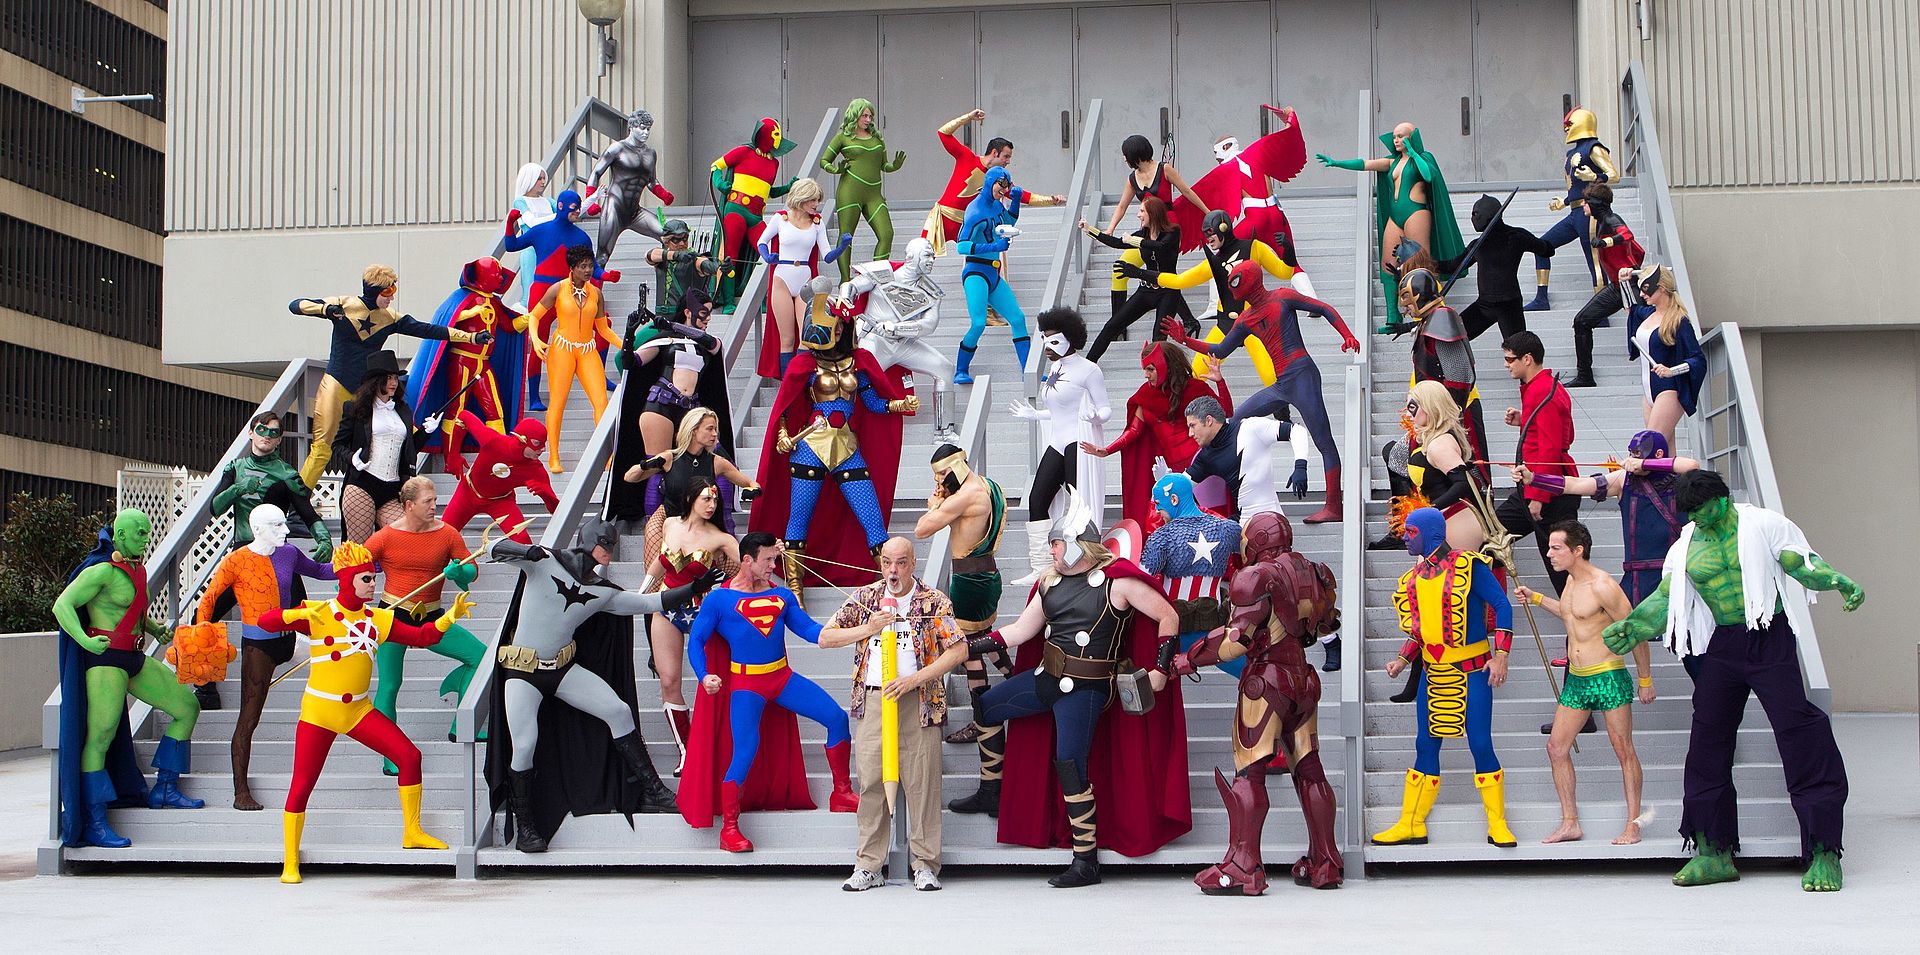 Cosplay Superhero Roundup: Avengers VS Justice League Costumes!